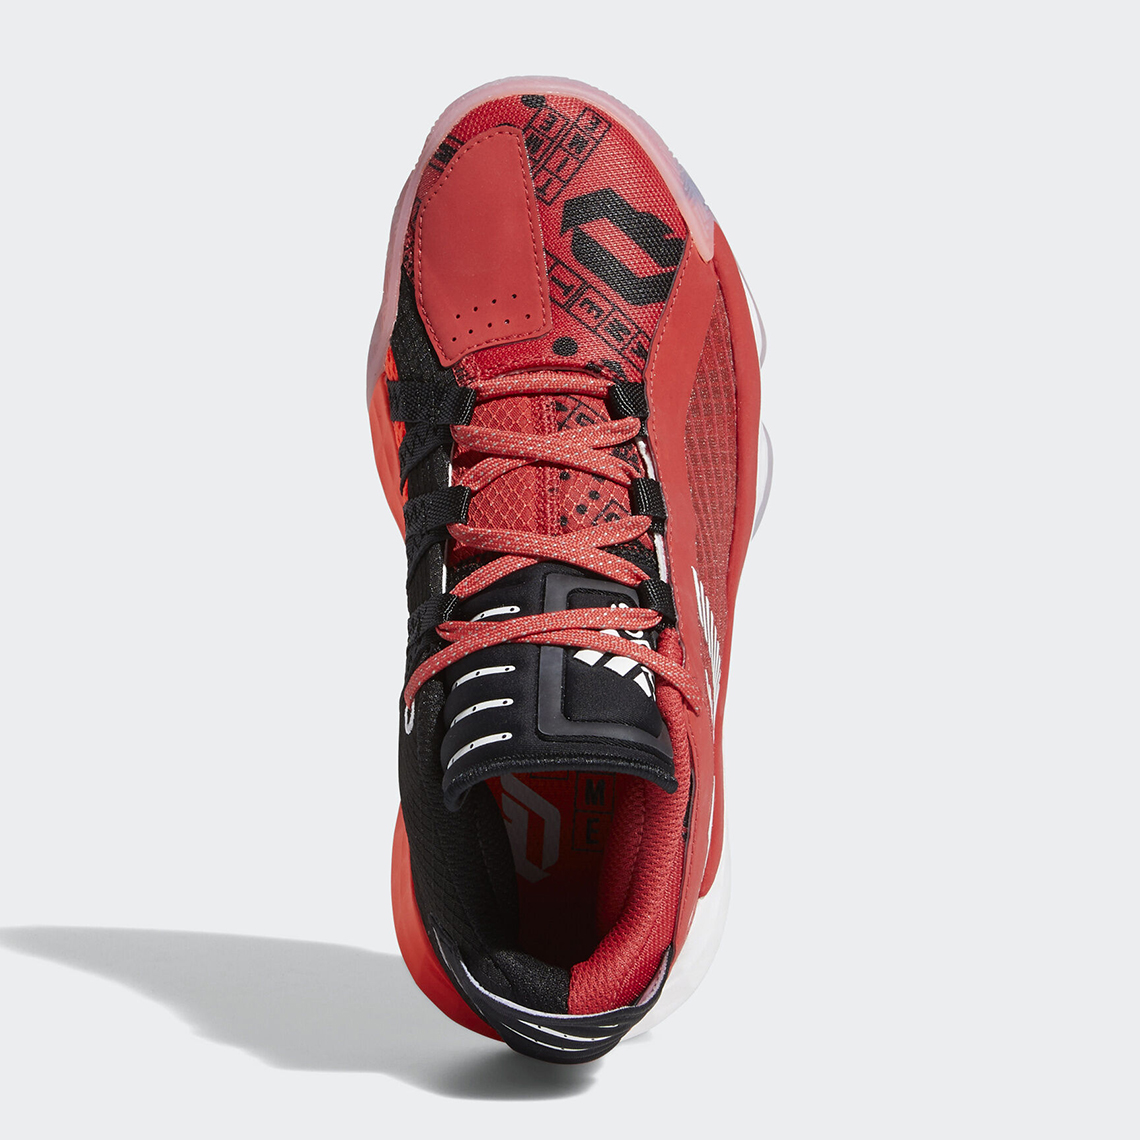 adidas Dame 6 Geek Up Red FW4341 SneakerNews com